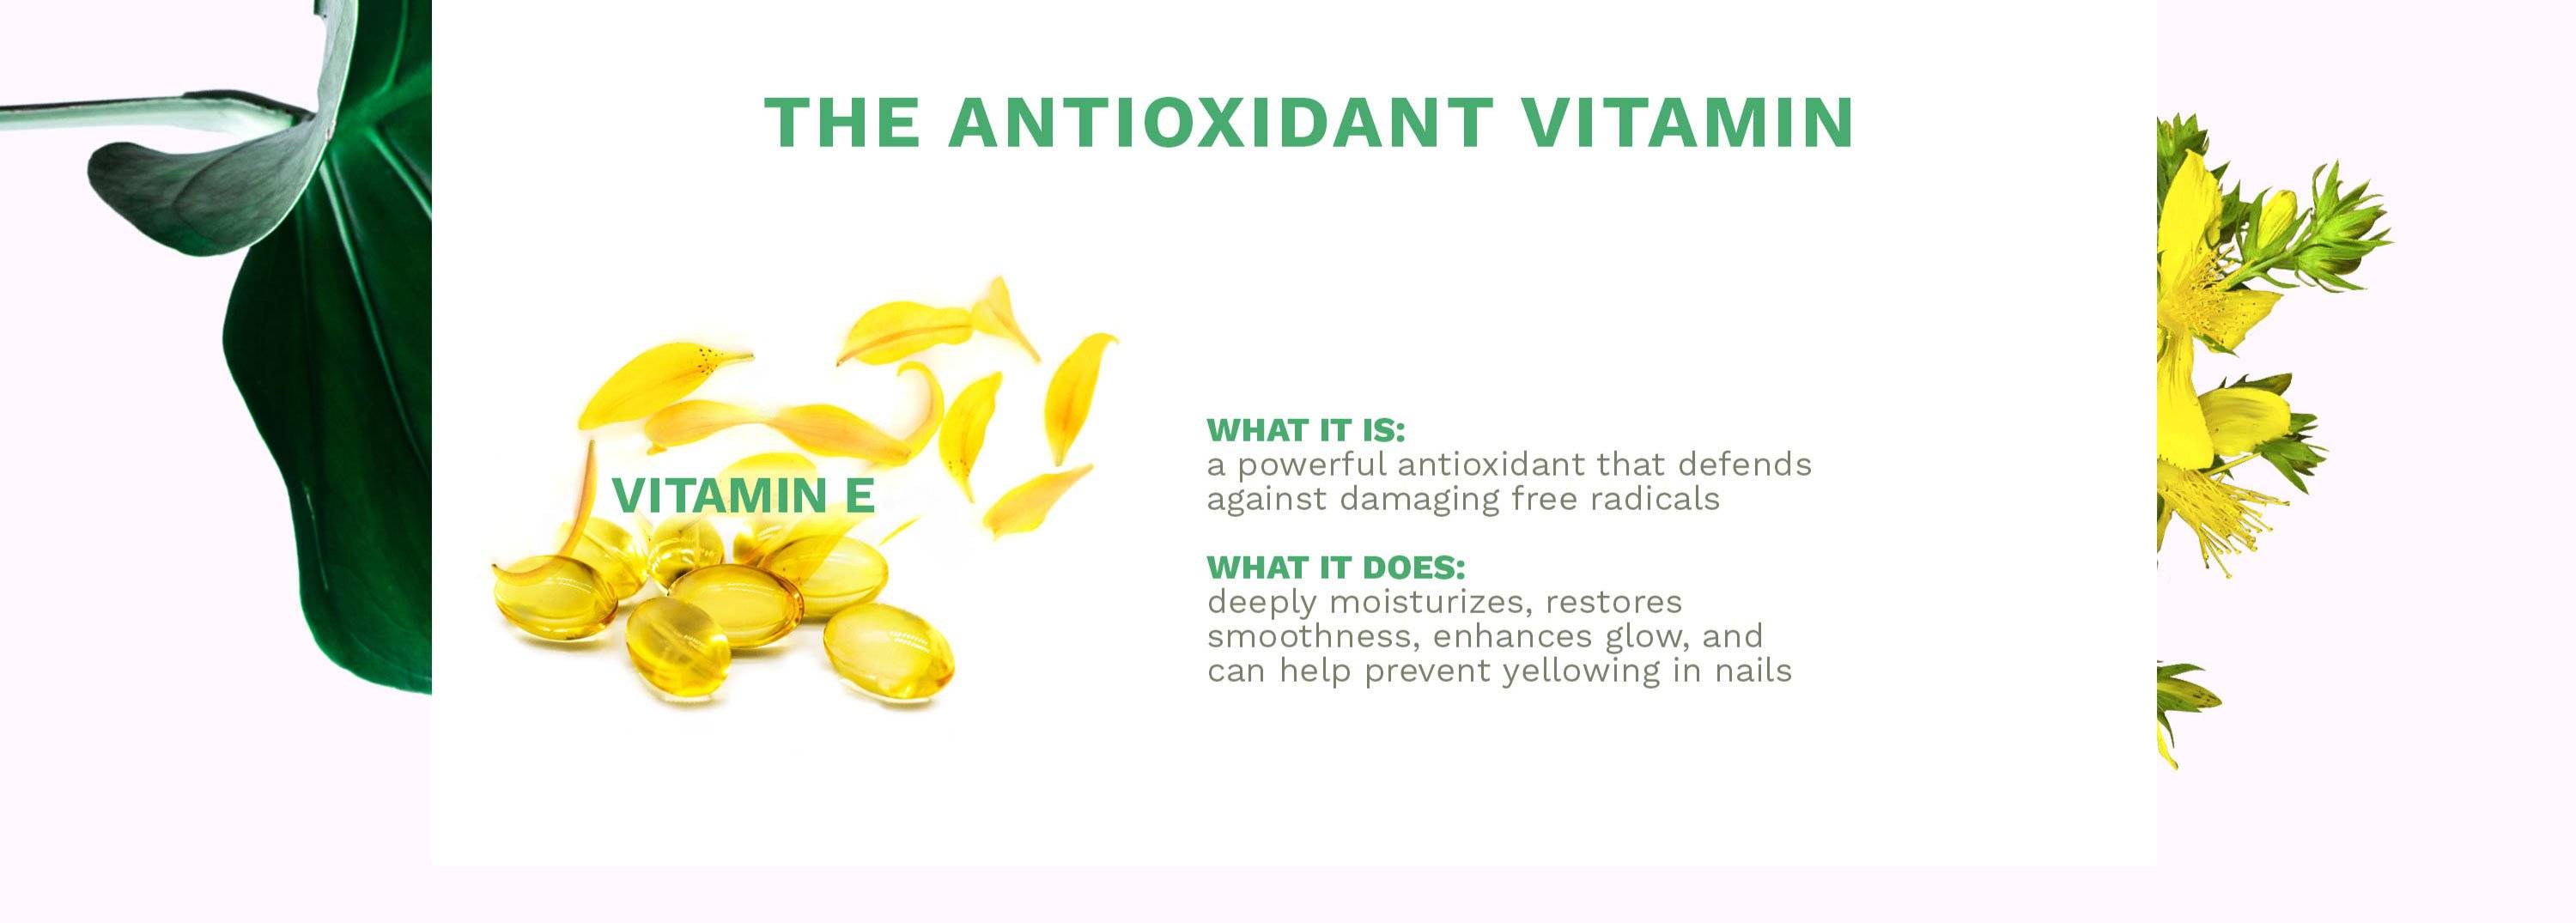 The Antioxidant Vitamin E